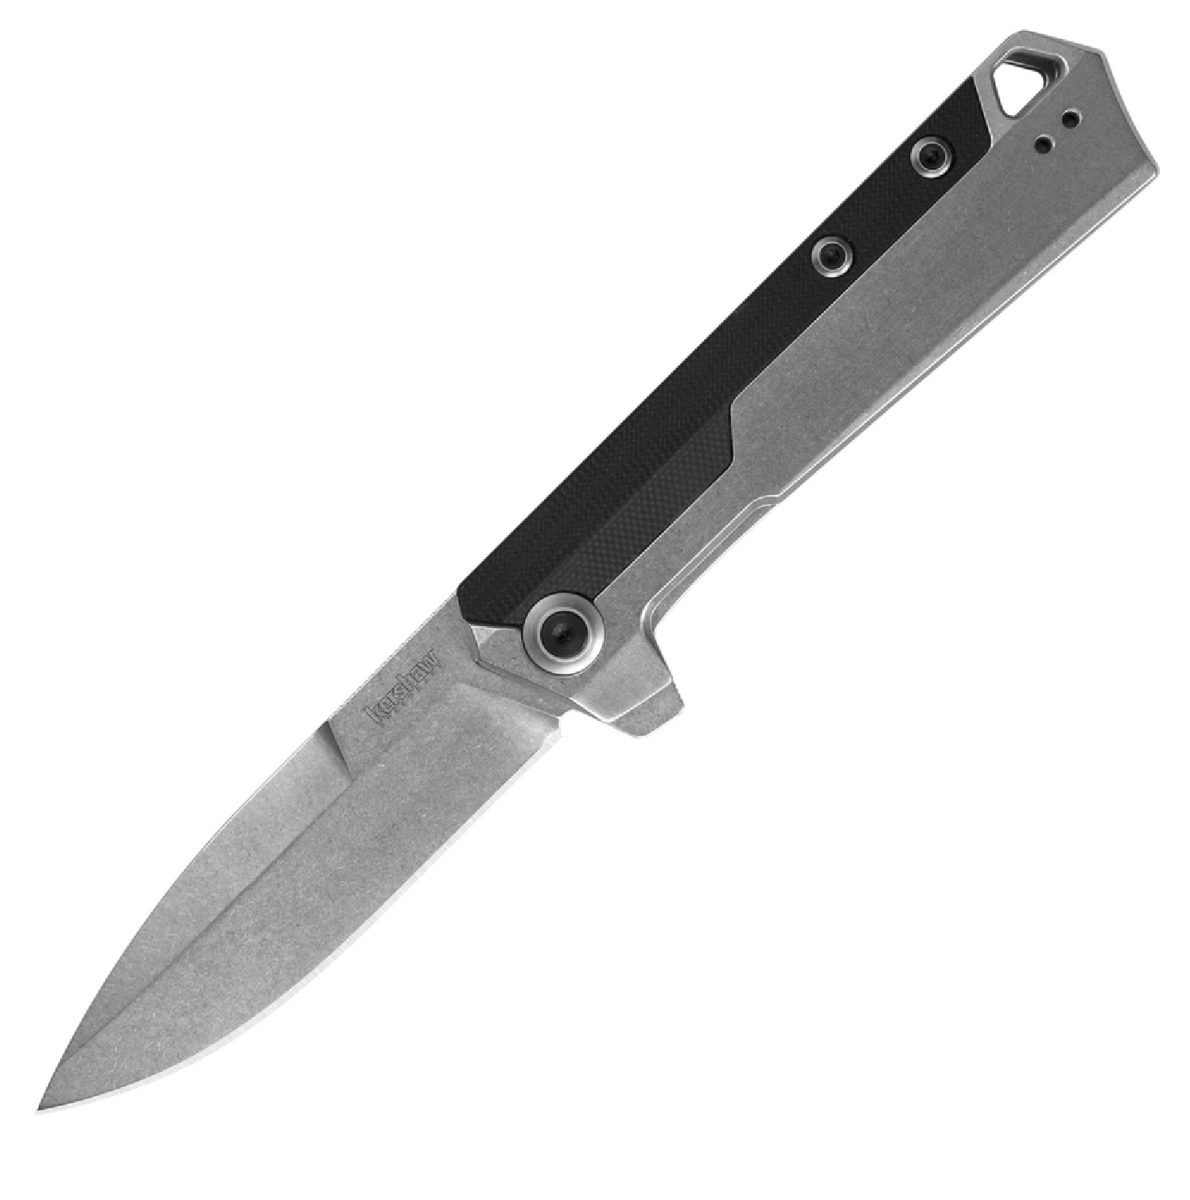 4018328 3.5 In. Oblivion Assist Knife Blade With Gfn Handle, Black